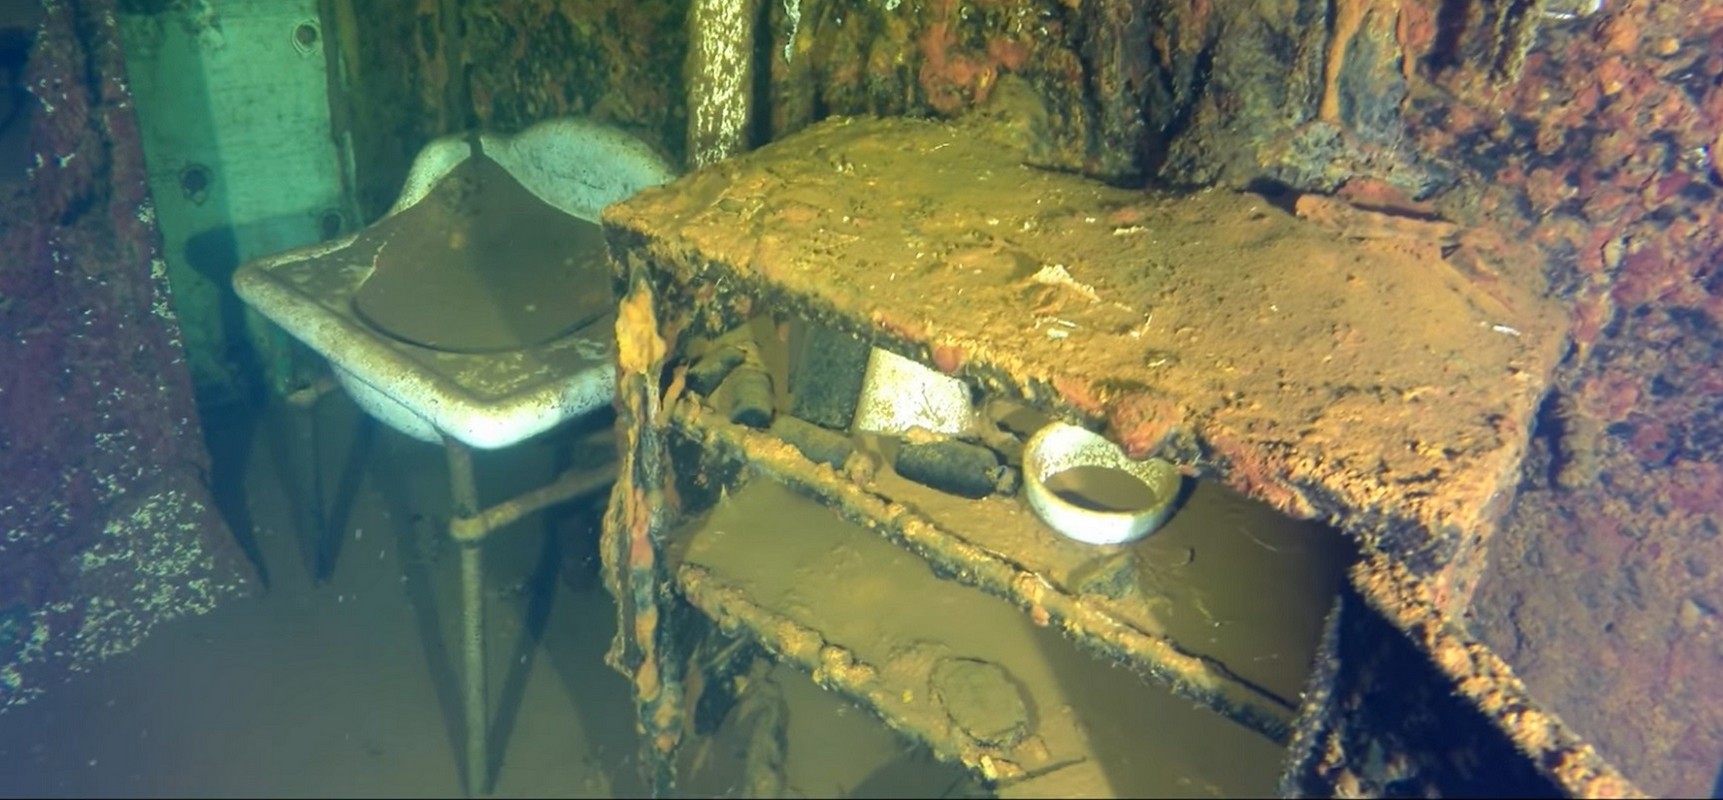 Bikini Atoll Liveaboard Diving - USS Saratoga Wreck Penetration